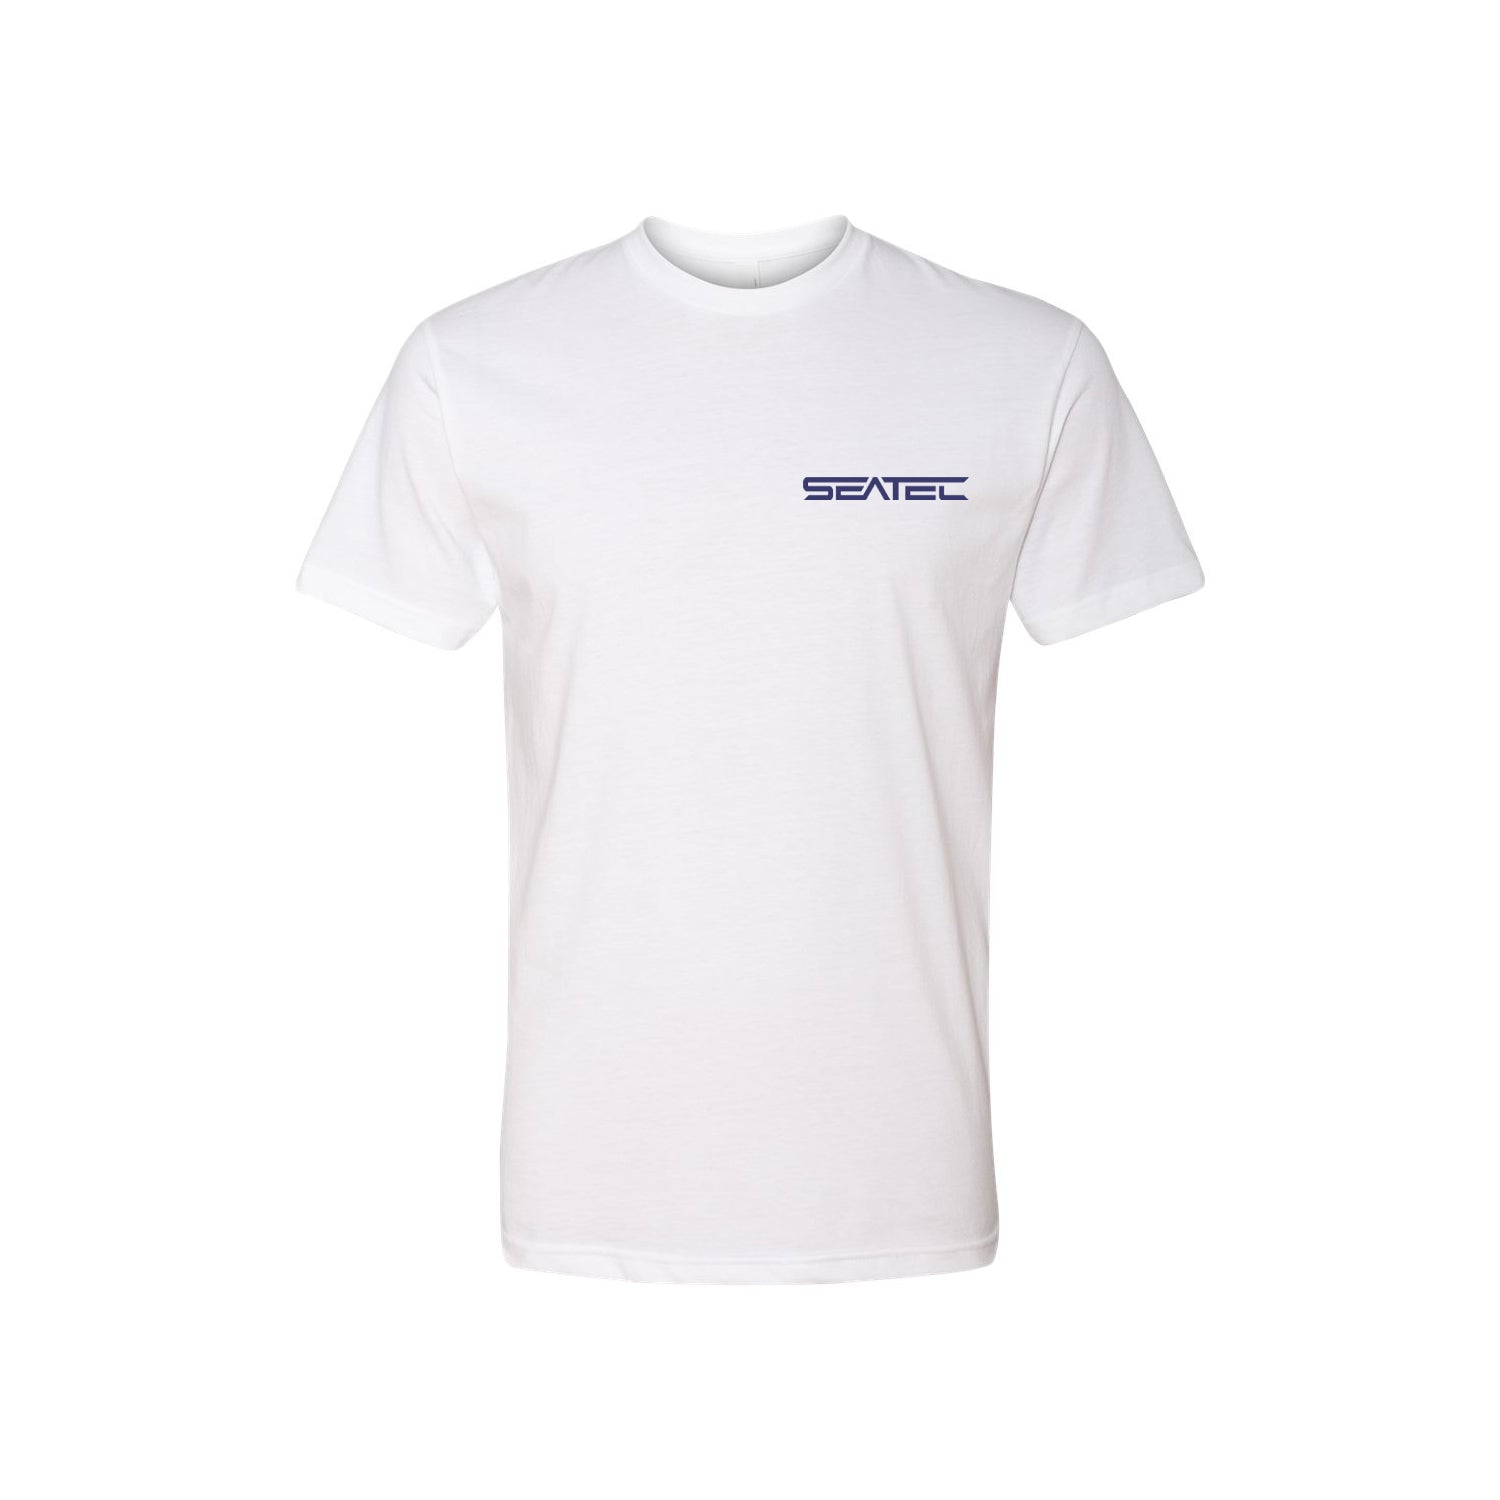 merica short sleeve white cotton t-shirt